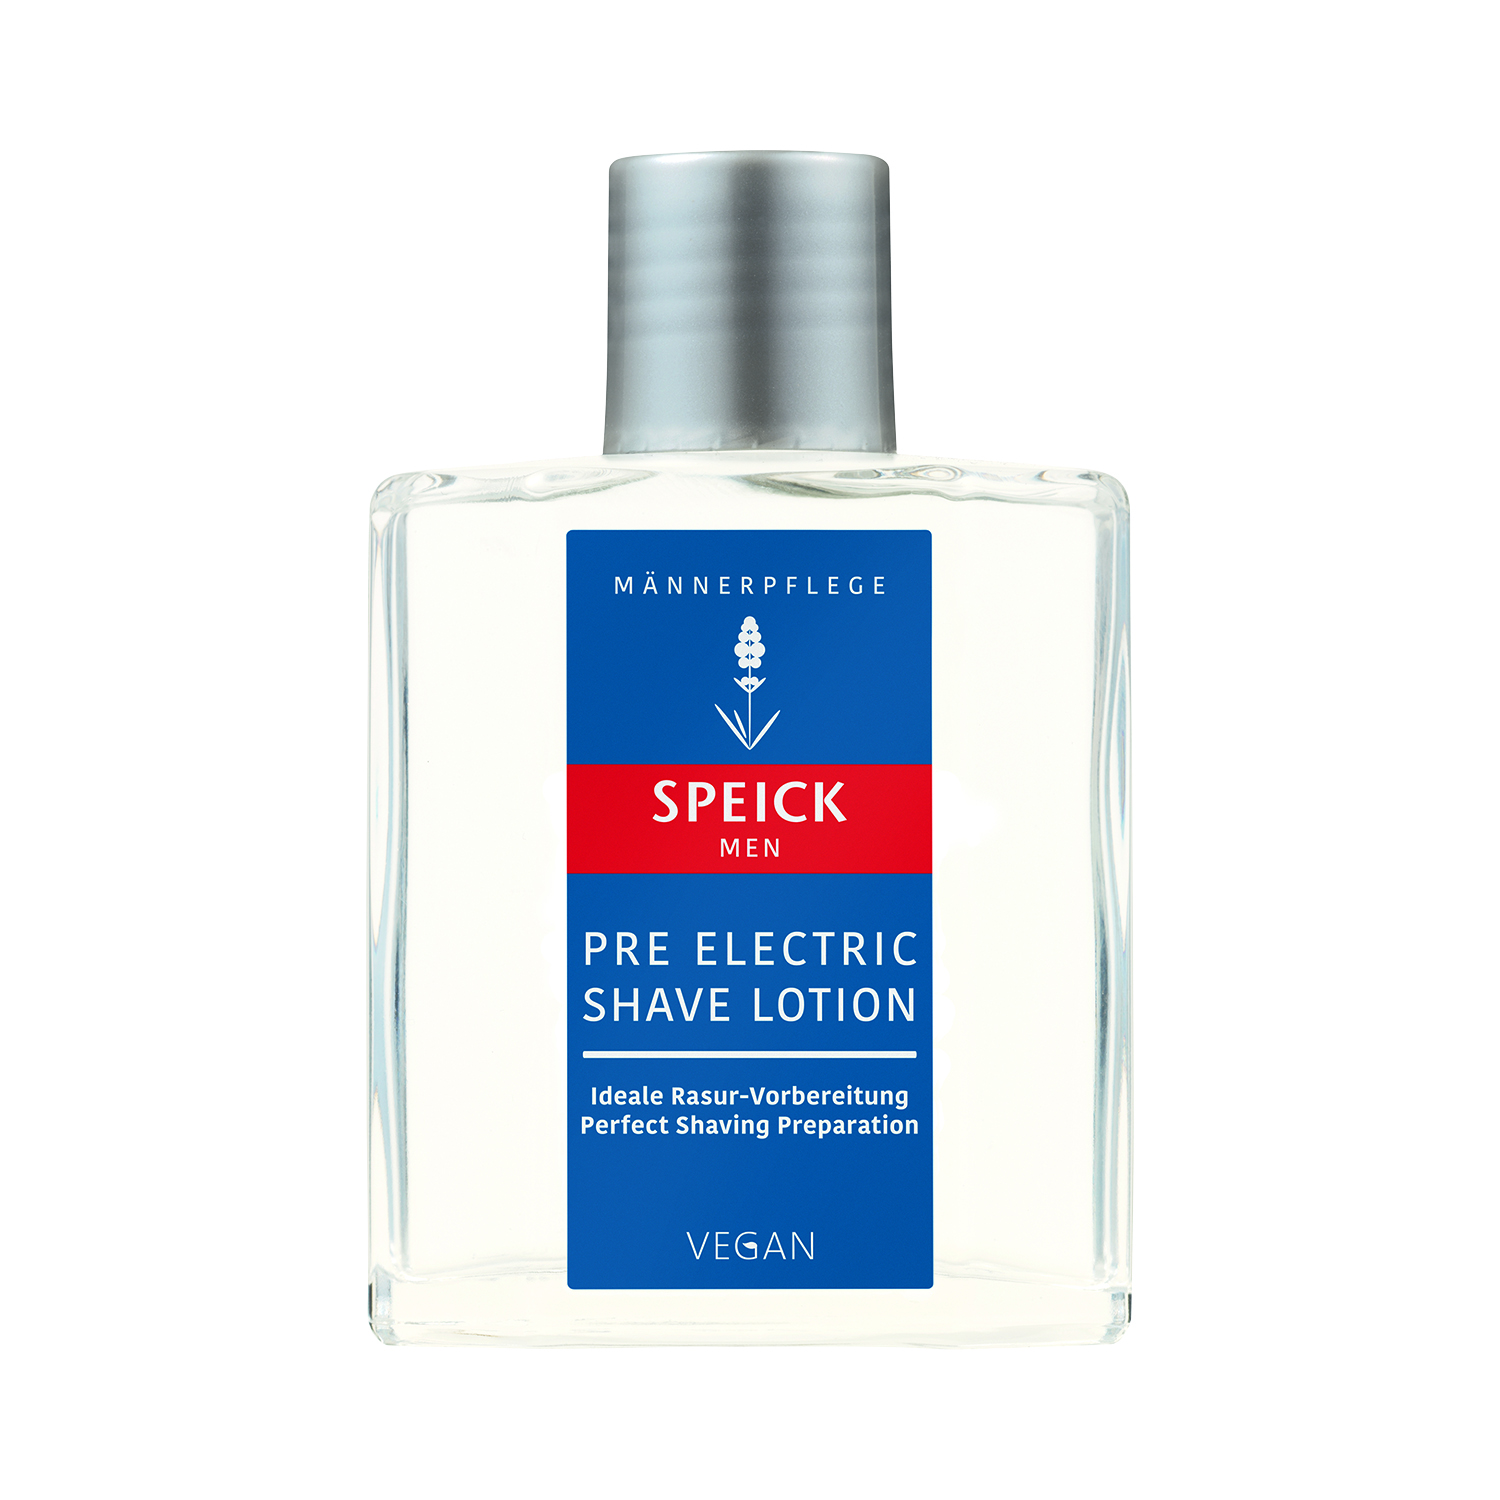 Speick Men - Pre Electric Shave Lotion